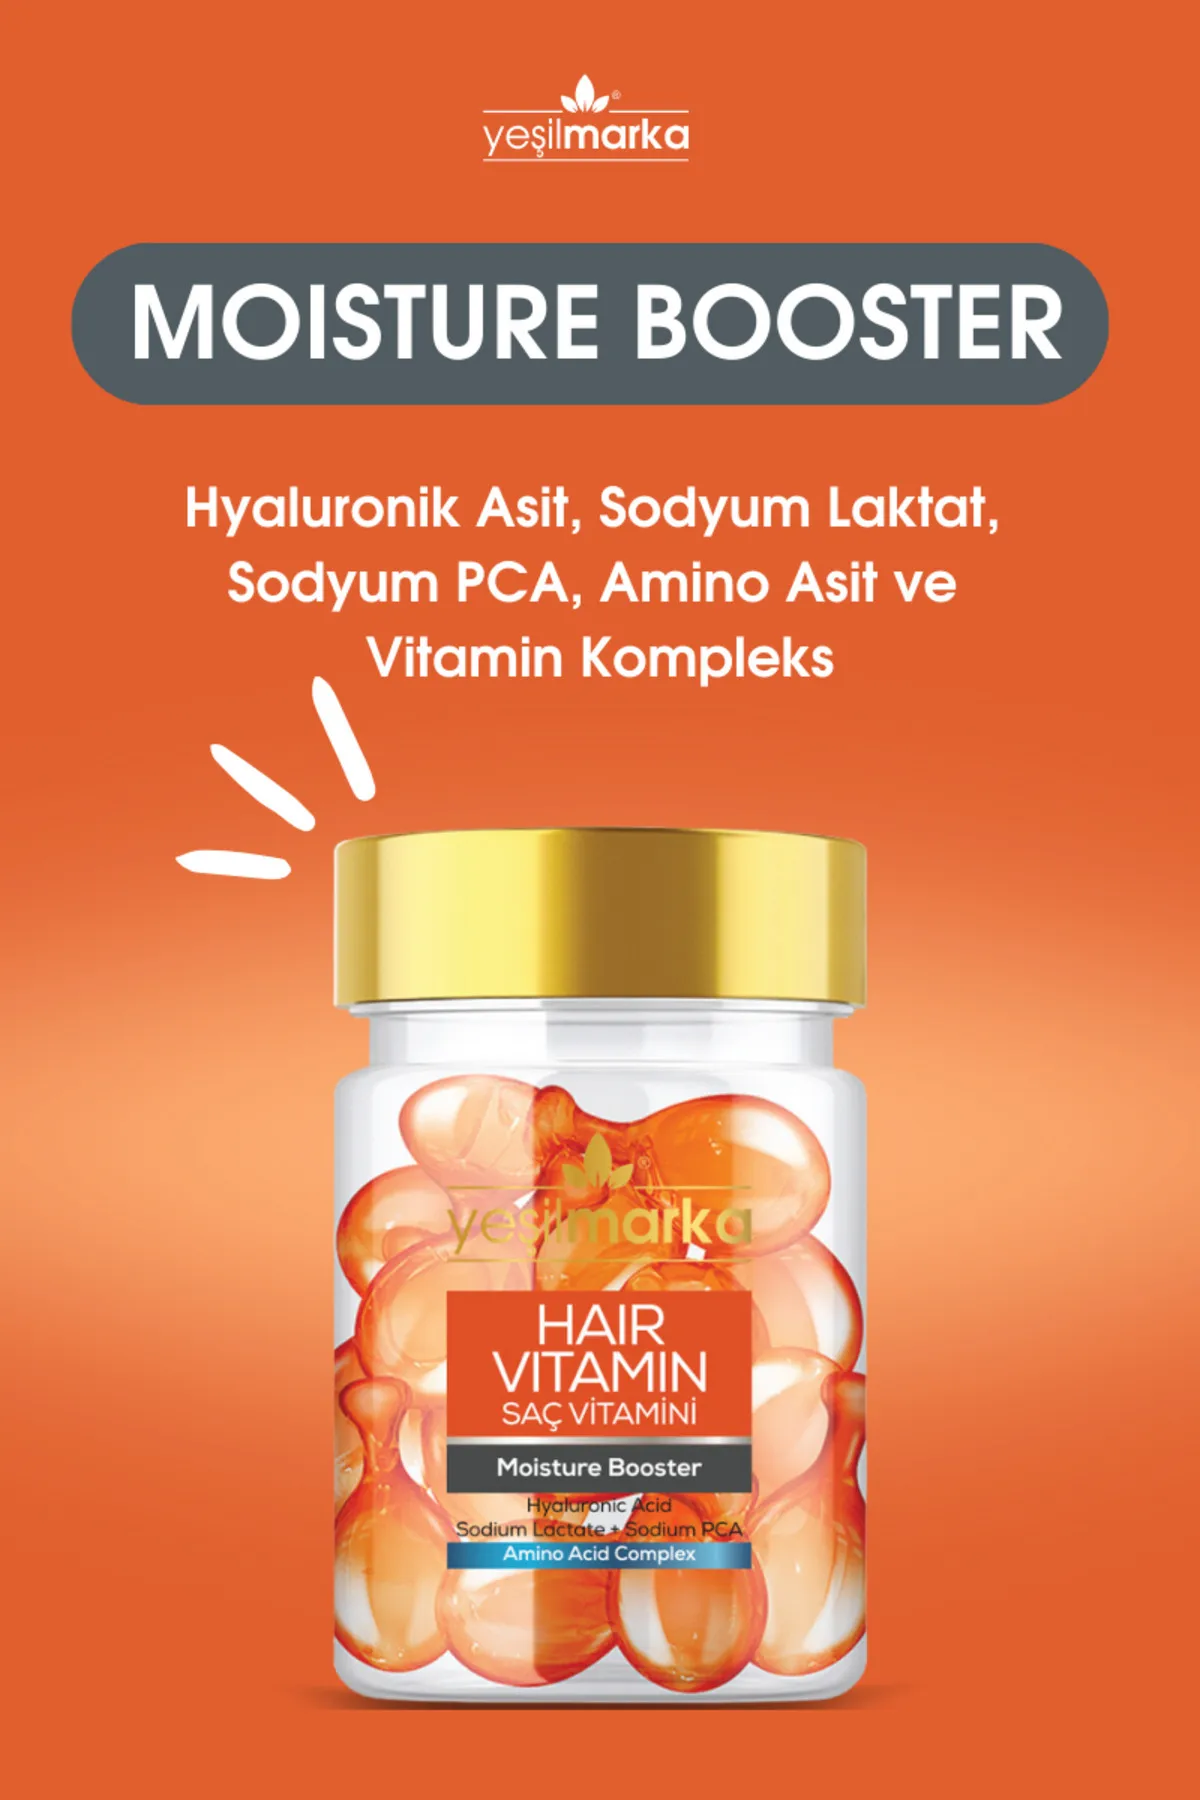 Yeşilmarka Saç Vitamini / Hair Vitamin - Moisture Booster